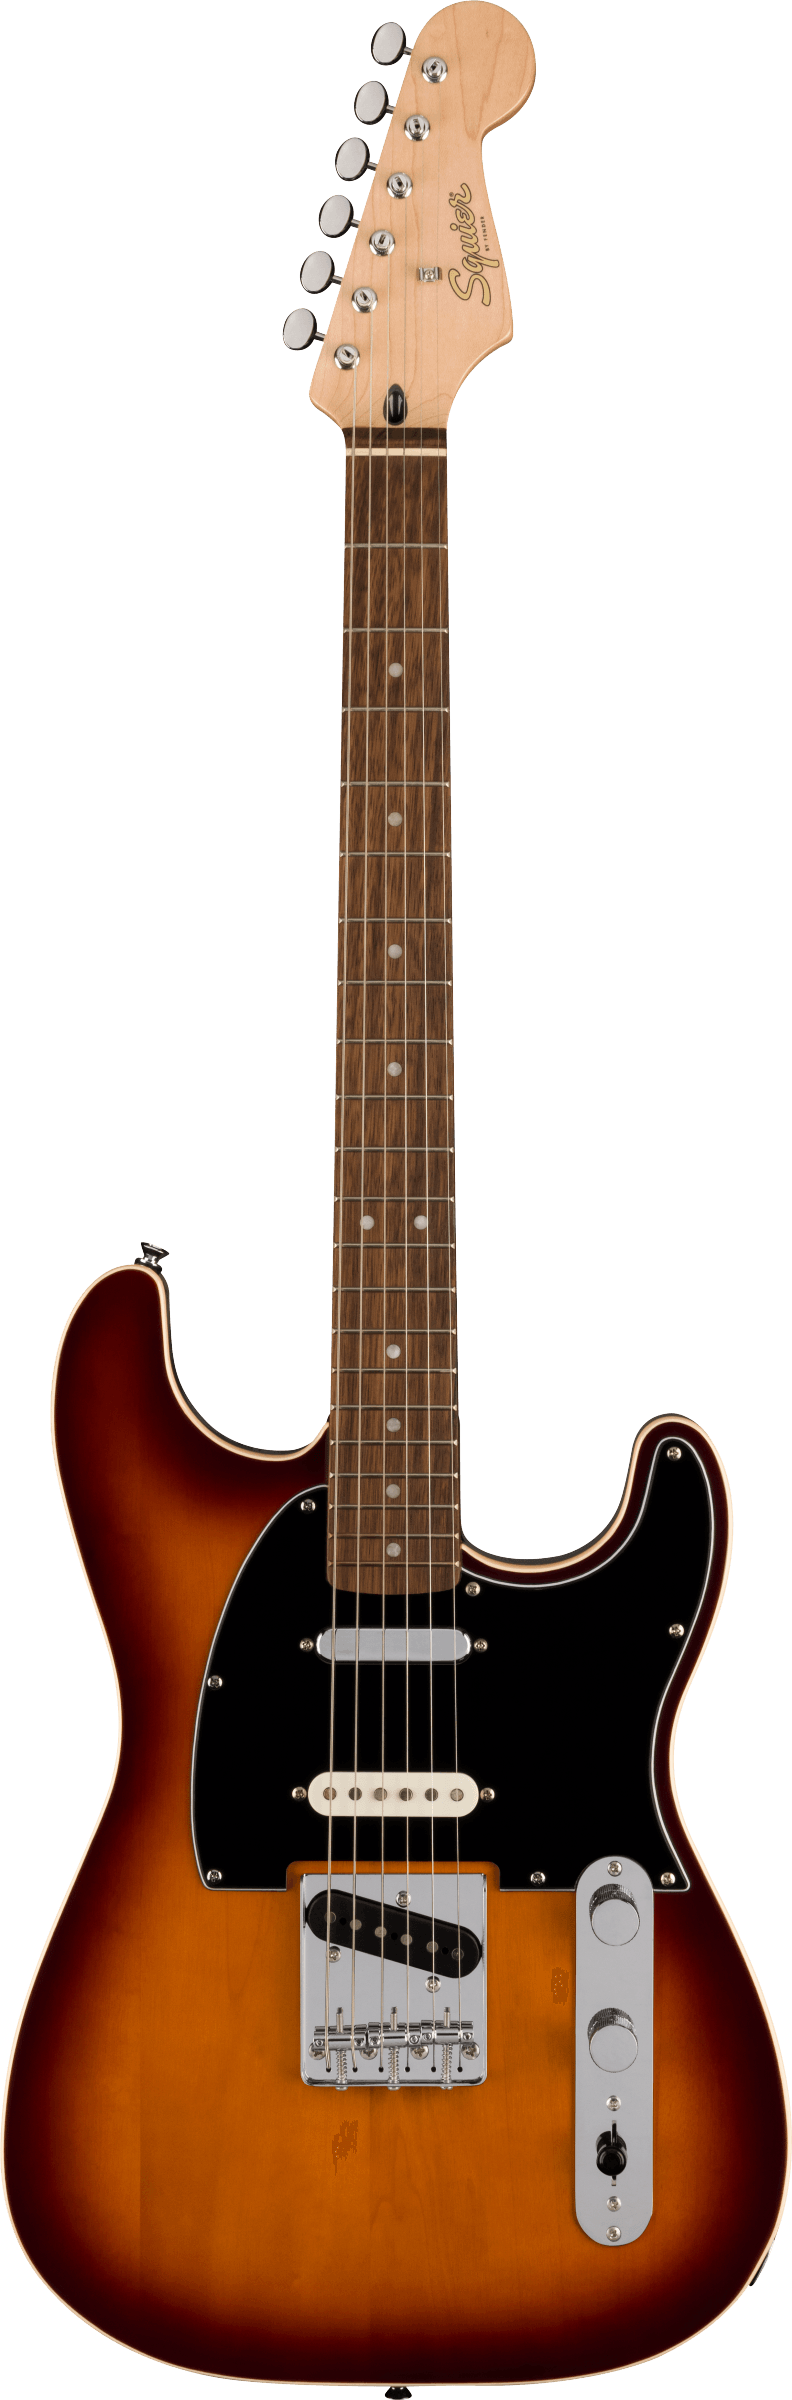 Squier Paranormal Custom Nashville Stratocaster in Chocolate 2-Colour Sunburst